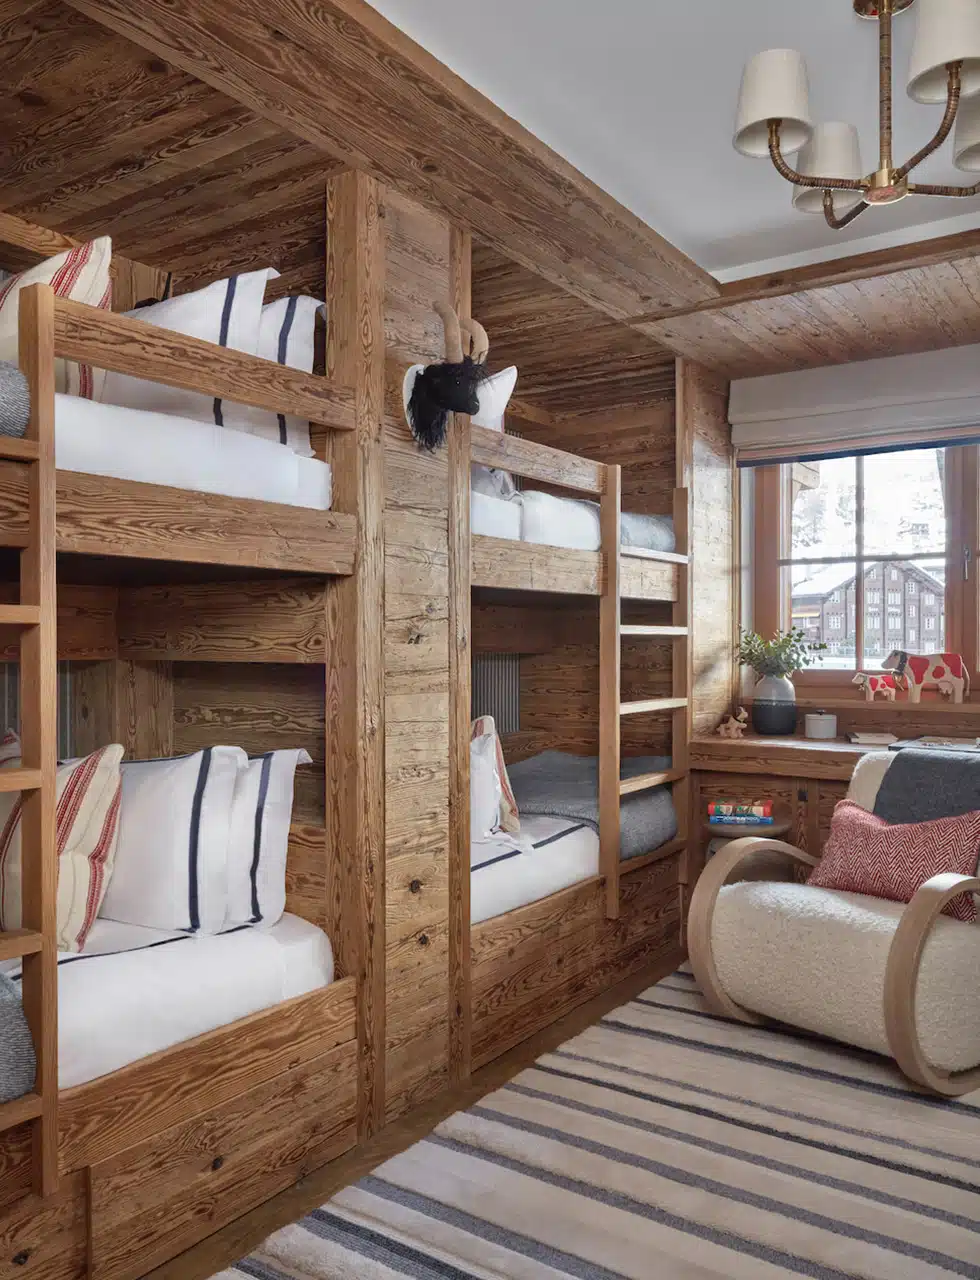 Kids bunk beds and room interior design in an alpine ski chalet